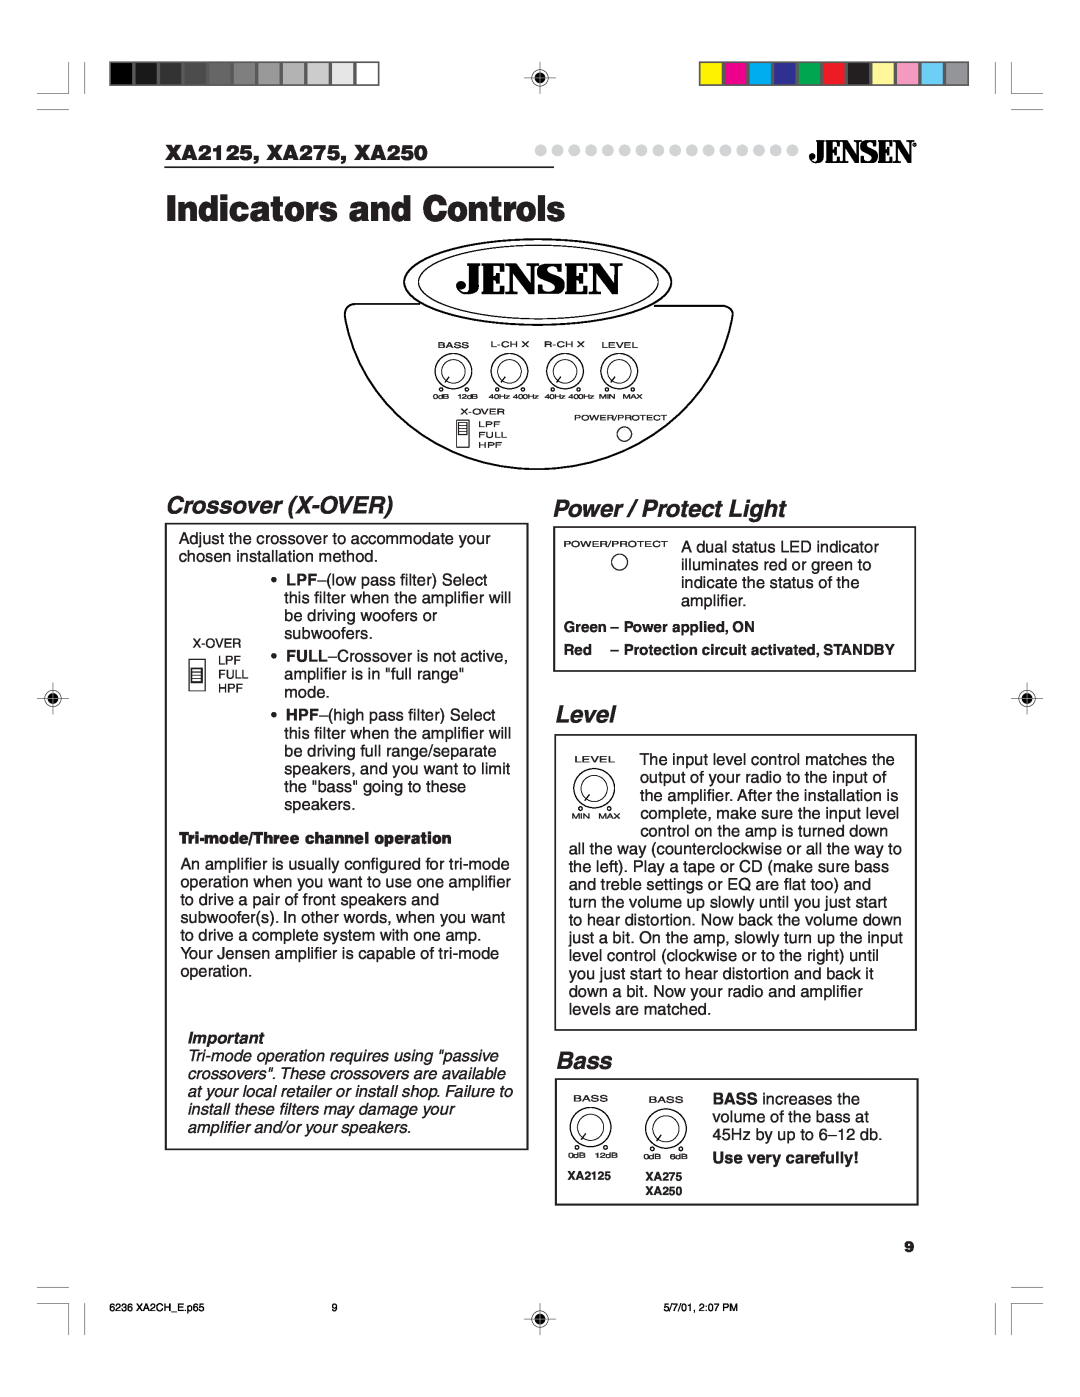 Jensen Tools warranty Indicators and Controls, Crossover X-OVER, Power / Protect Light, Bass, XA2125, XA275, XA250 